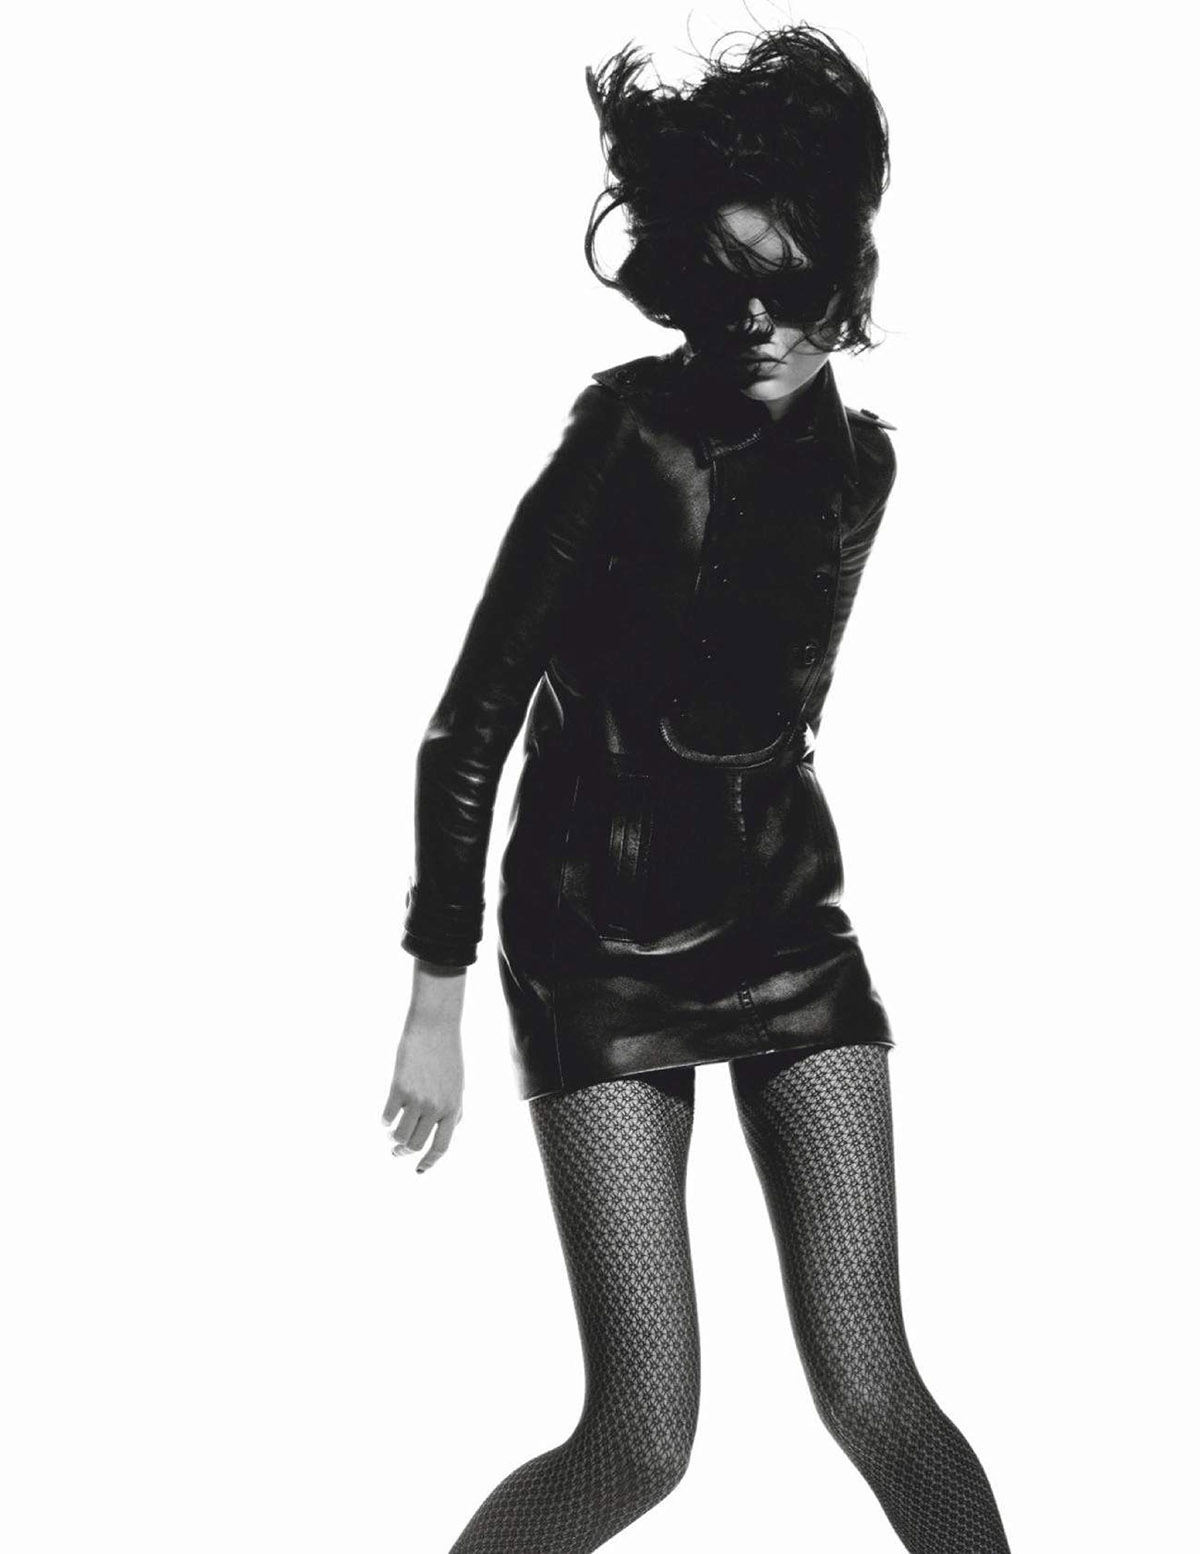 Sofia Steinberg by David Sims for Vogue Paris March 2021